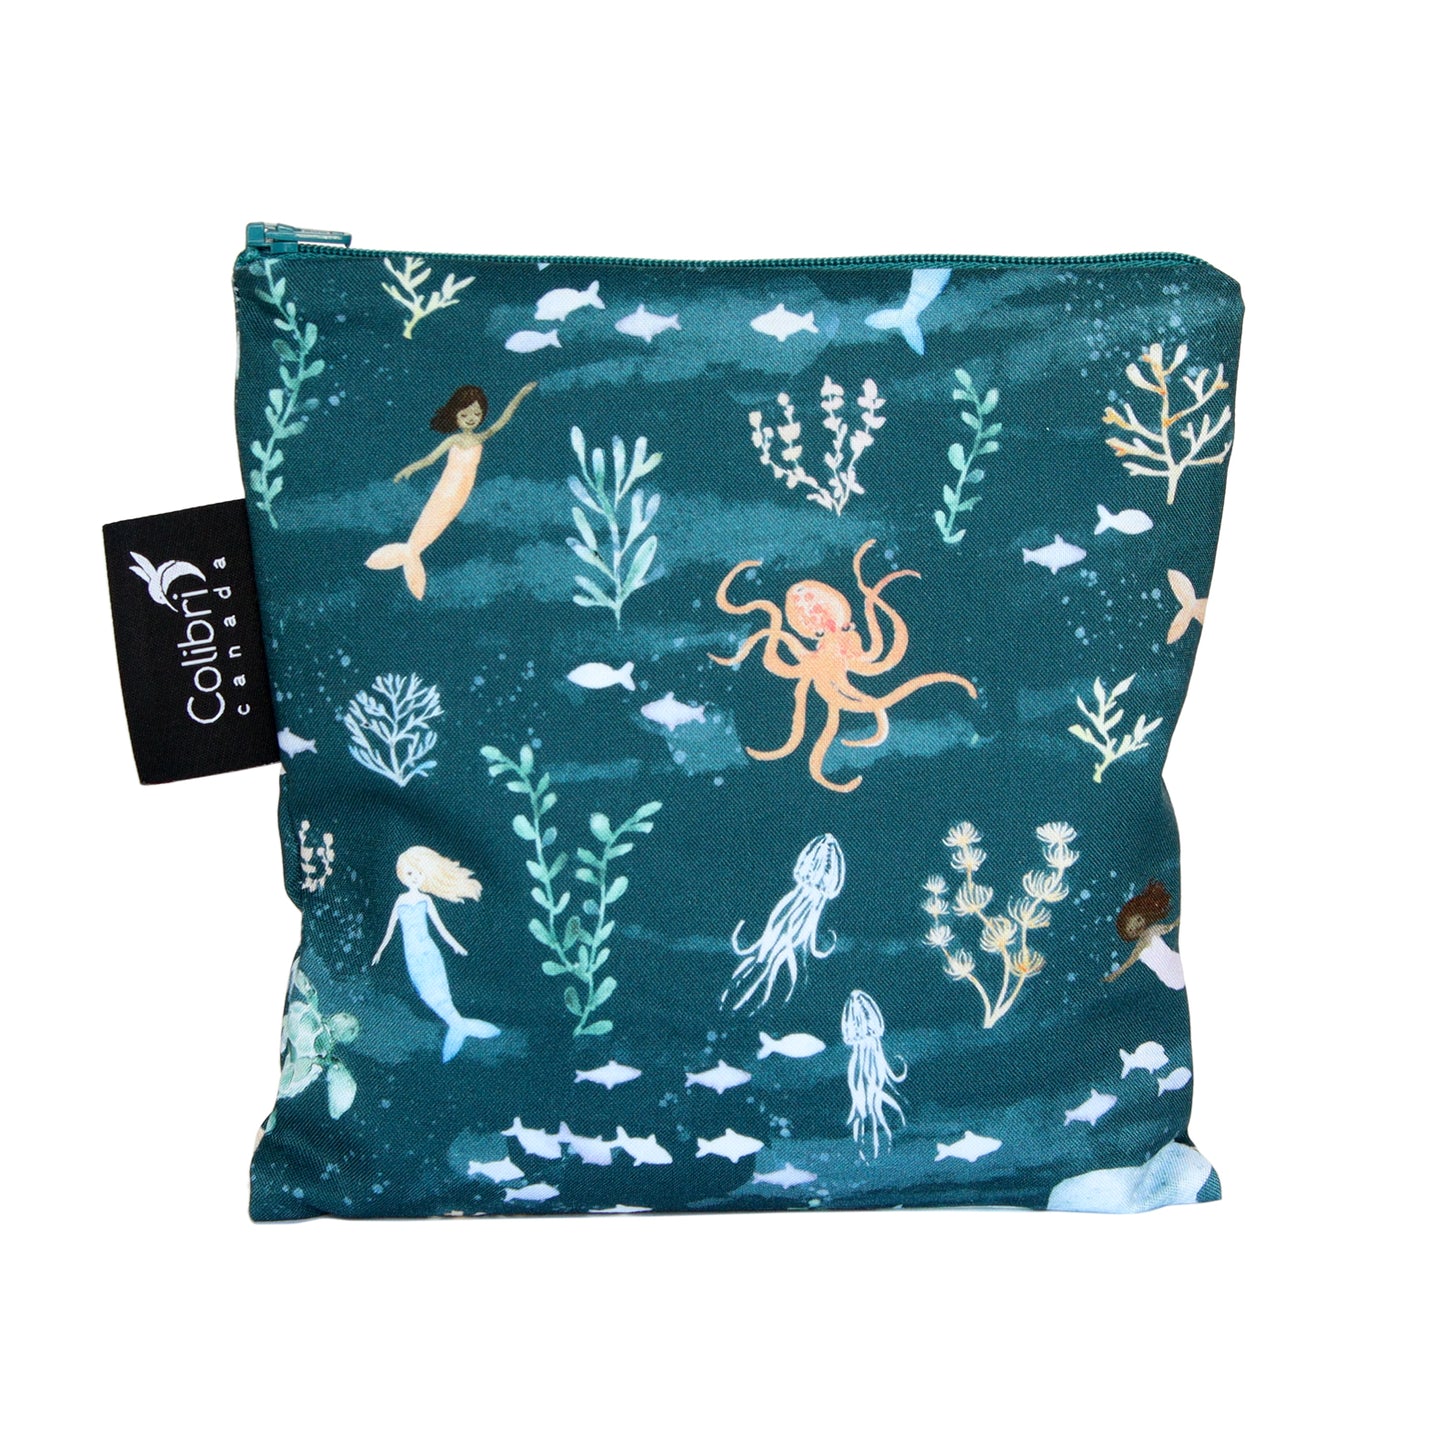 Mermaids Reusable Snack Bag - Large